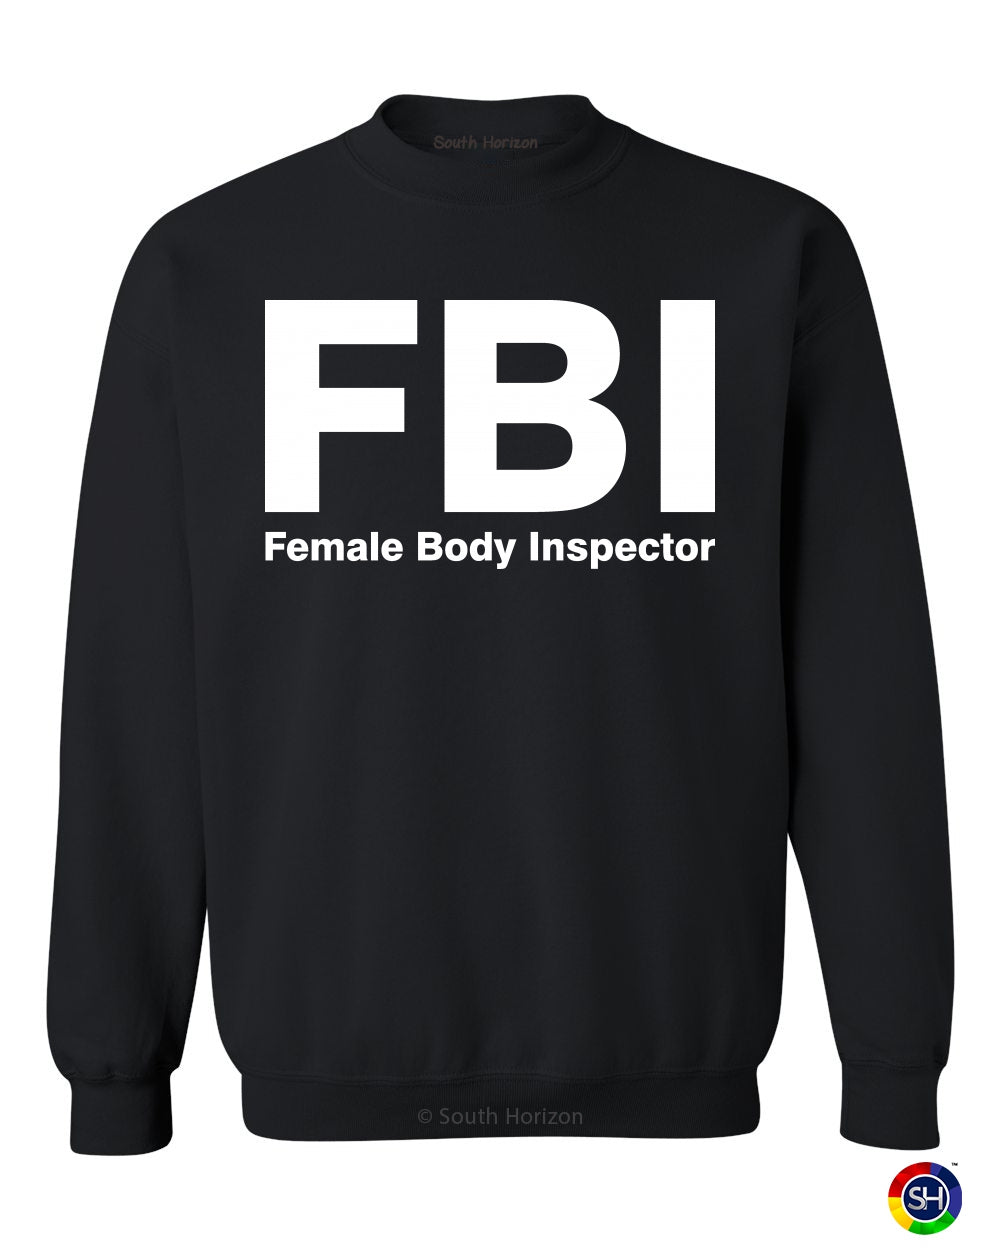 FBI - Female Body Inspector on SweatShirt